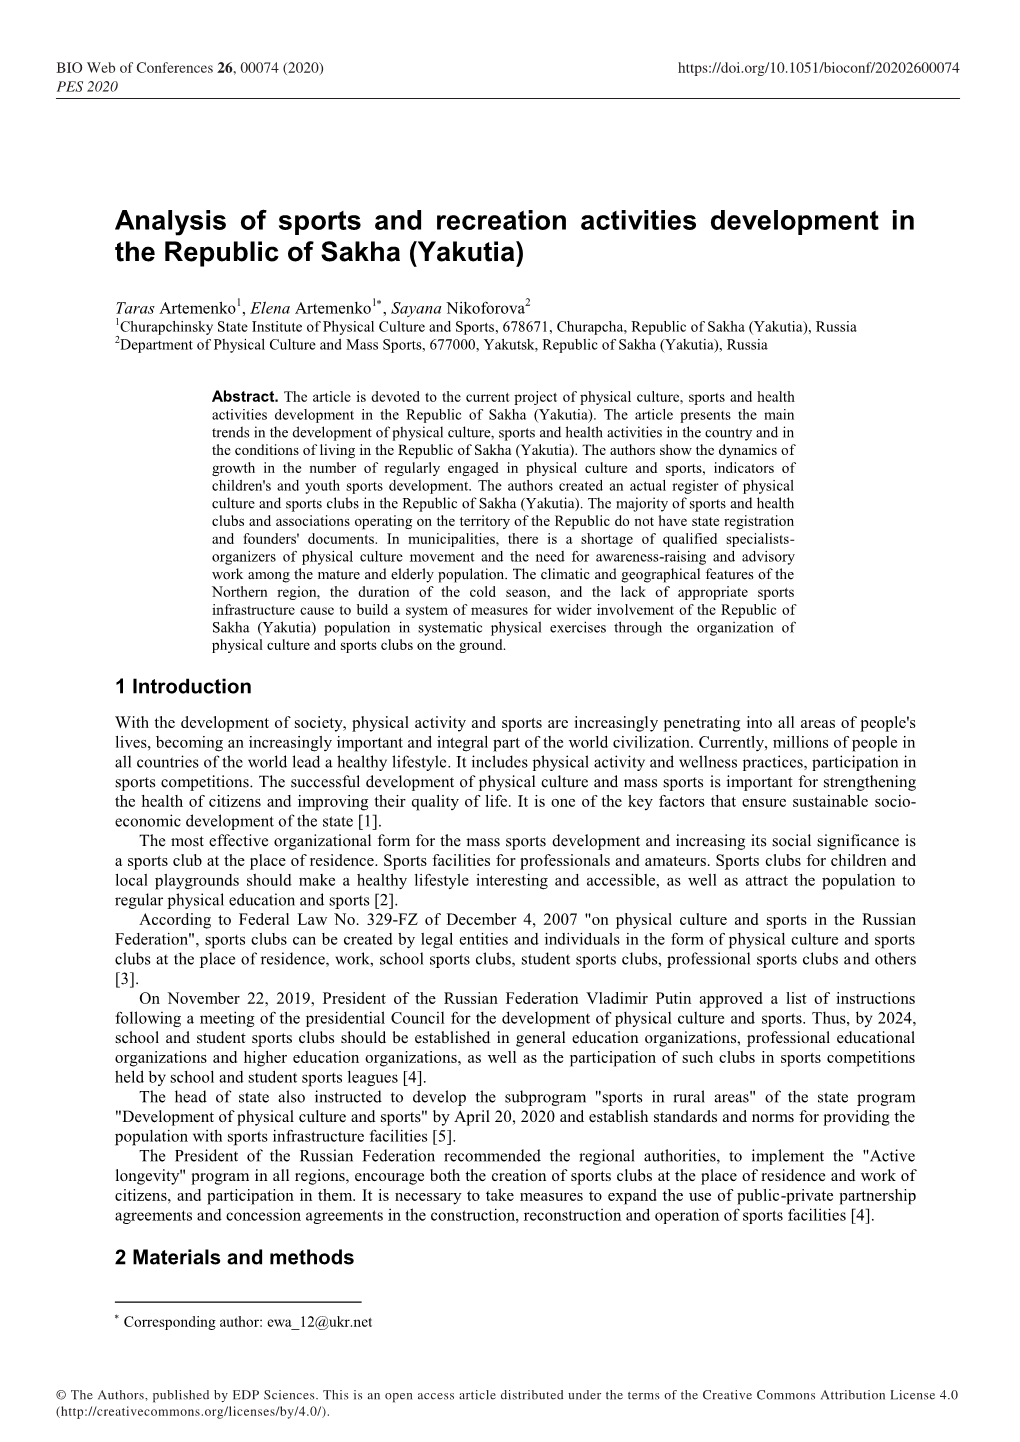 Analysis of Sports and Recreation Activities Development in the Republic of Sakha (Yakutia)